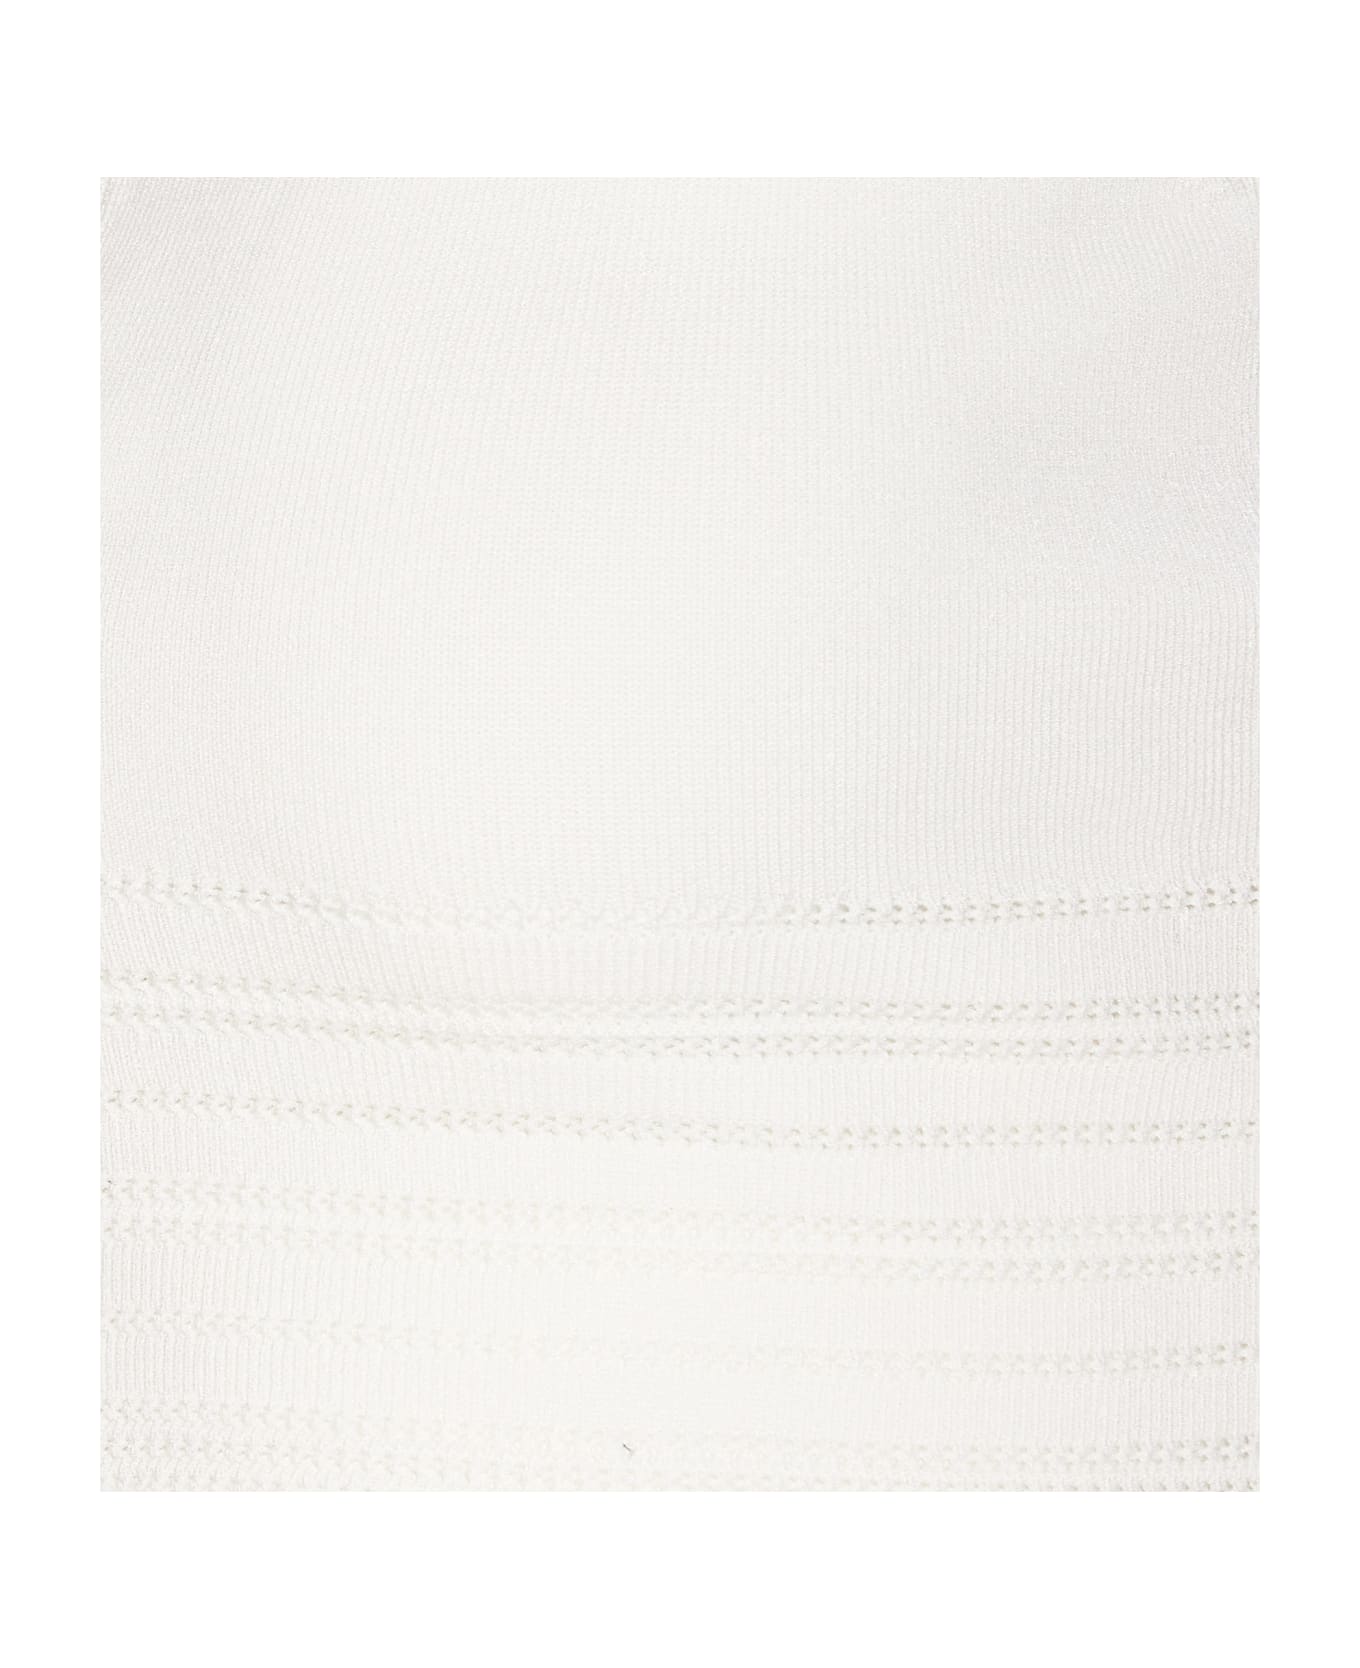 Victoria Beckham Frame Top - White